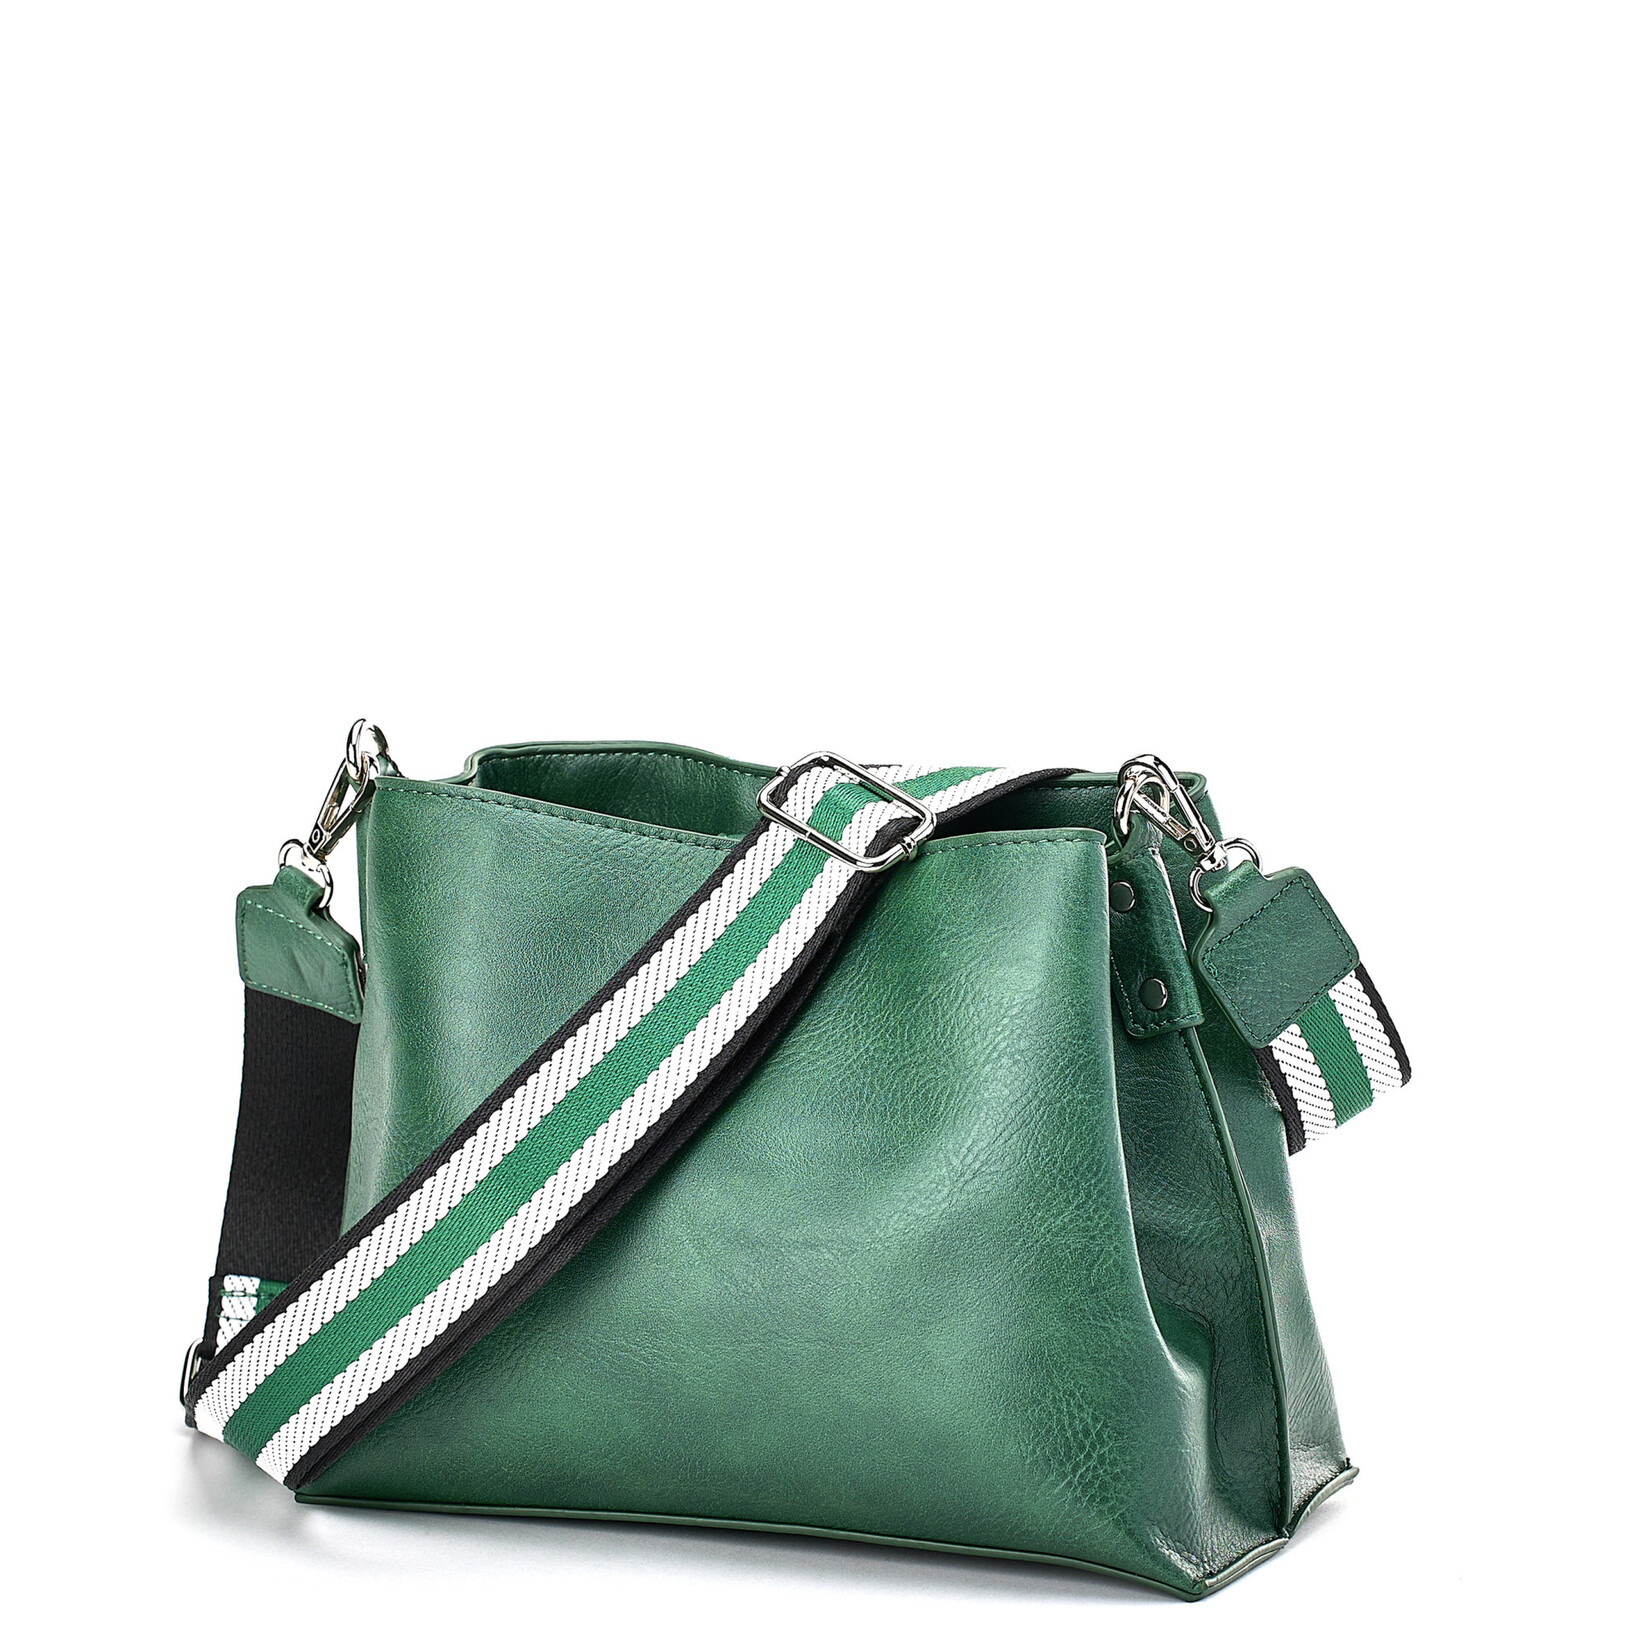 Amazon.com: Luxury Women's Leather Handbag - Green Shoulder Bag - Italian  Made - Elegant and Stylish Women's Purse : Handmade Products